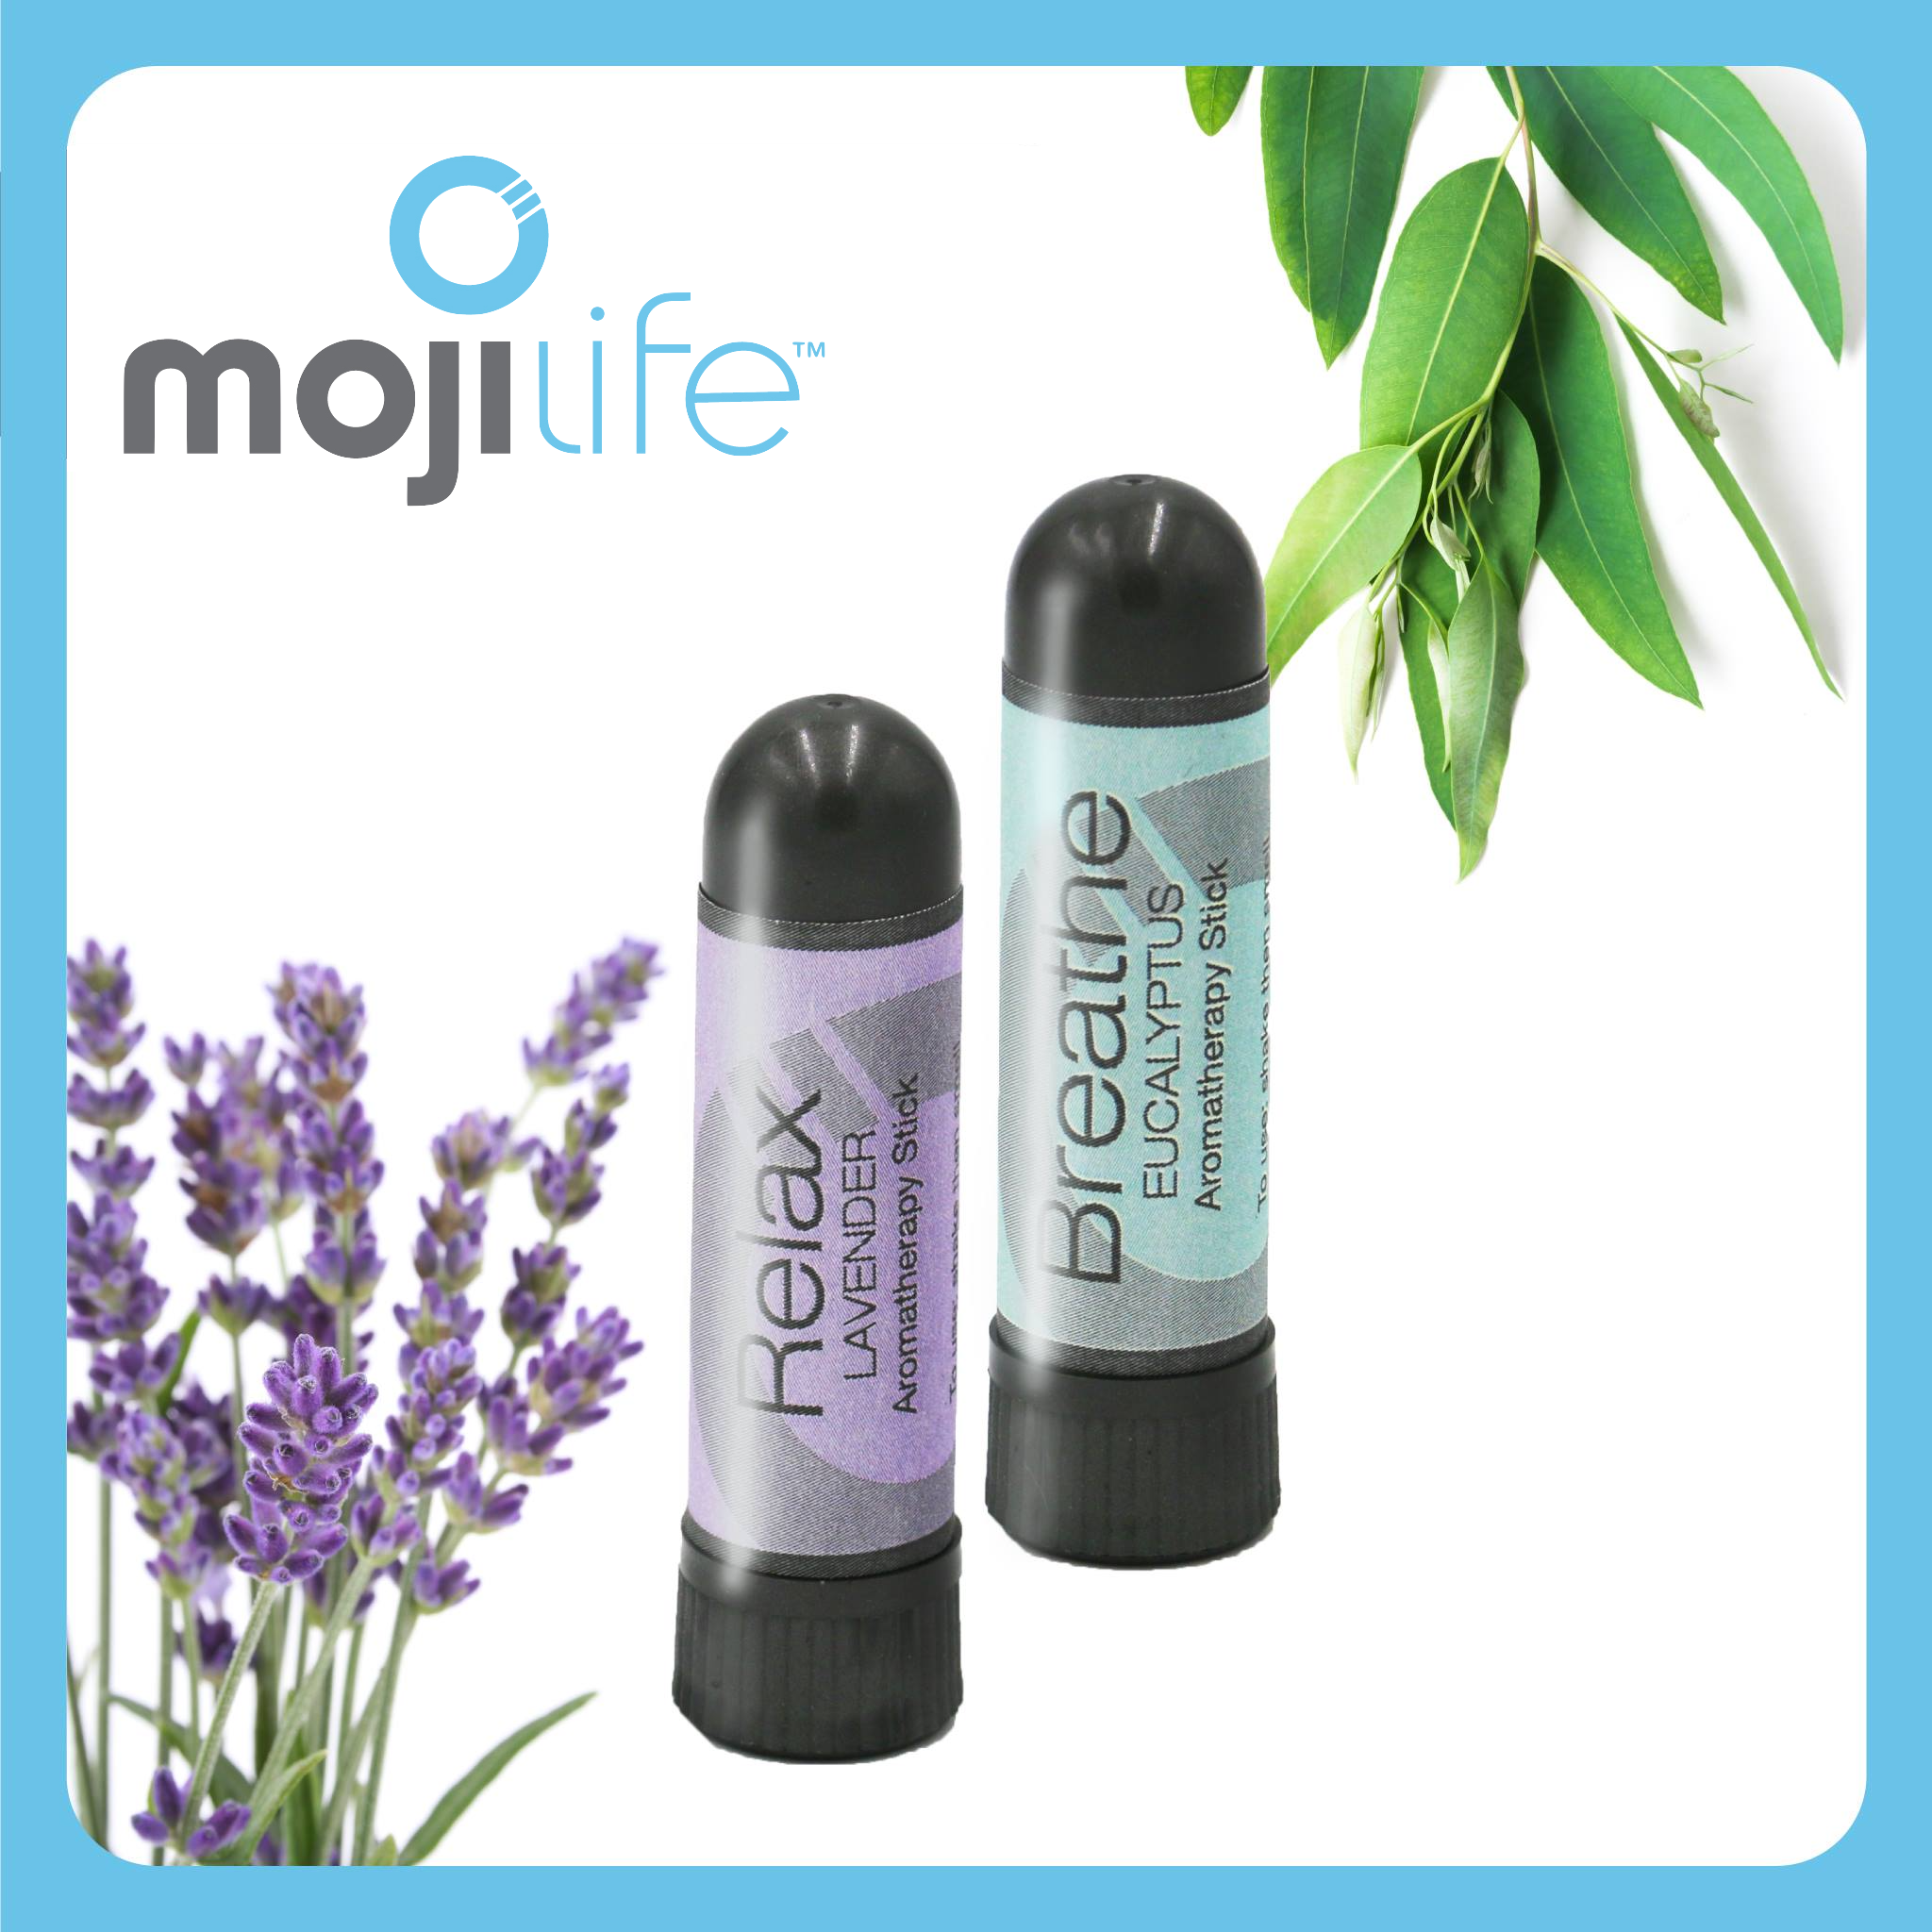 New MojiLife Aromatherapy Inhaler Sticks!